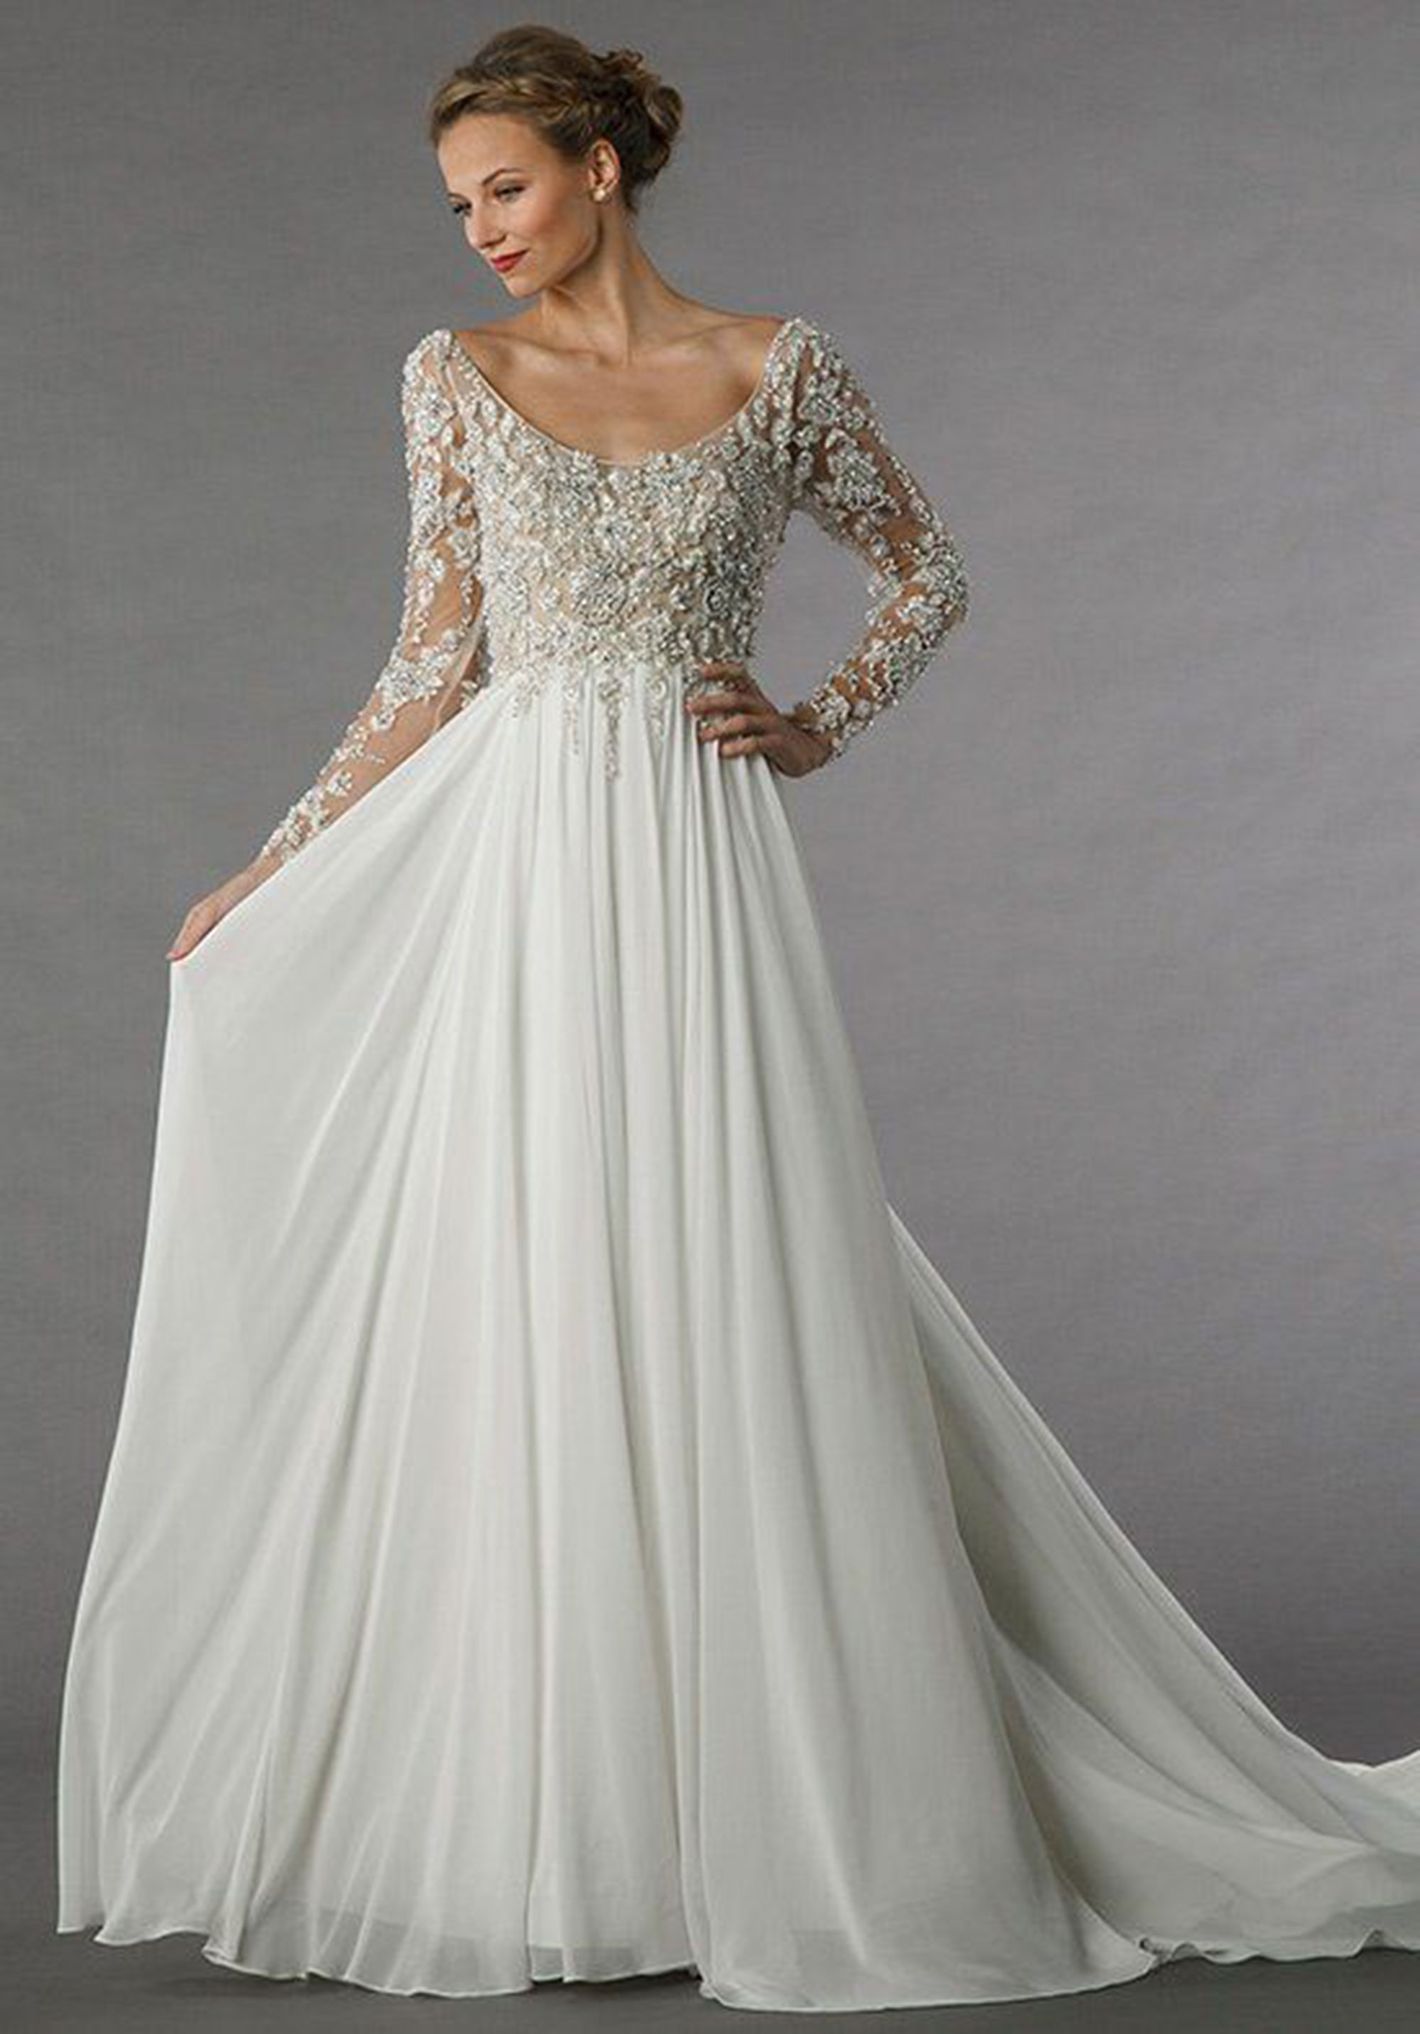 23 Elegant Long Sleeve Wedding Dresses For Winter Weddings 6960